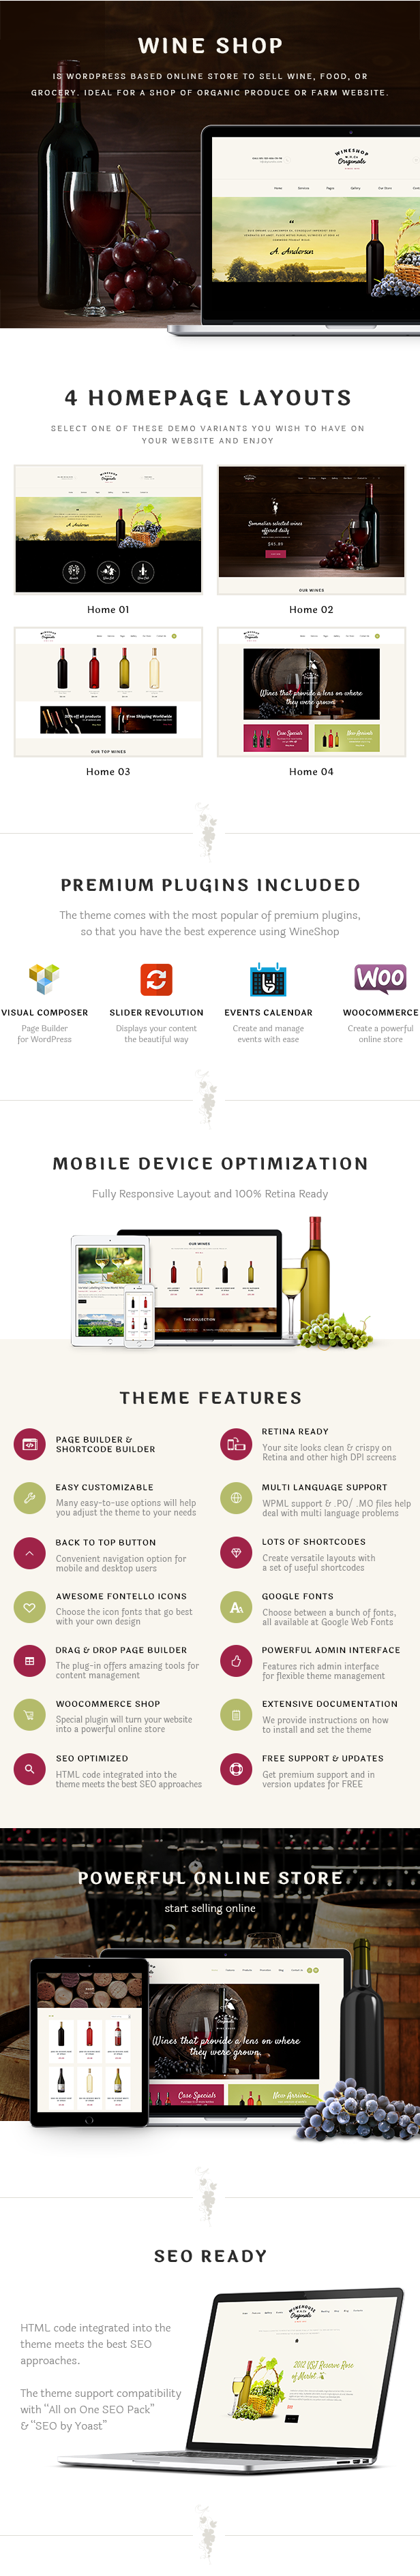 Food & Wine Online Store WordPress Theme features